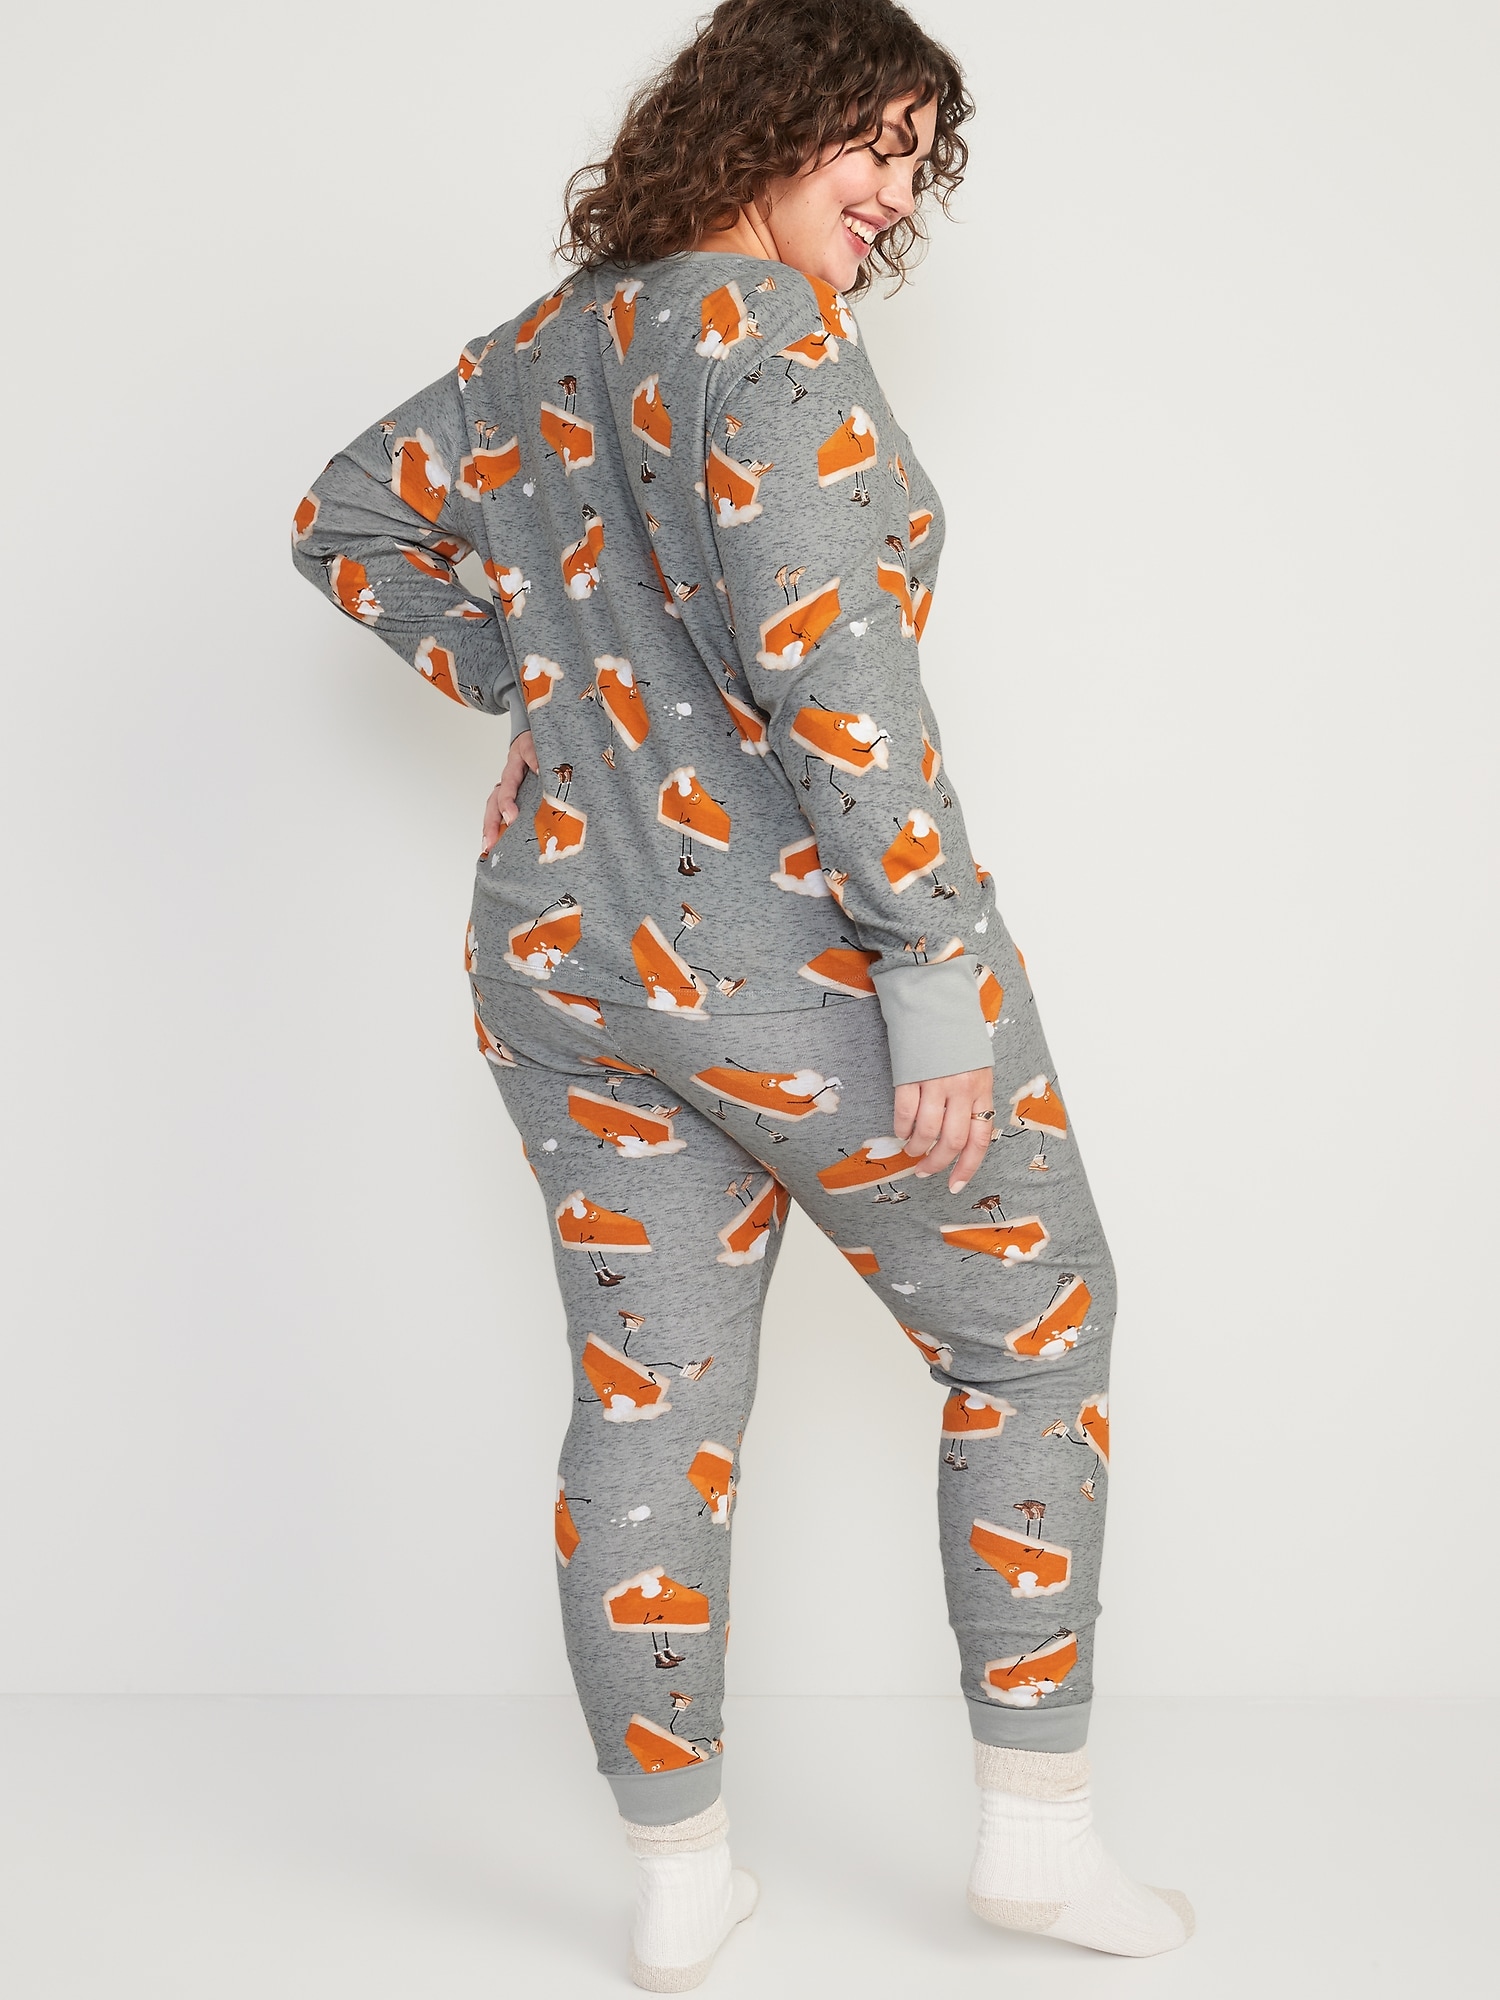 Matching Graphic Pajama Set for Women | Old Navy